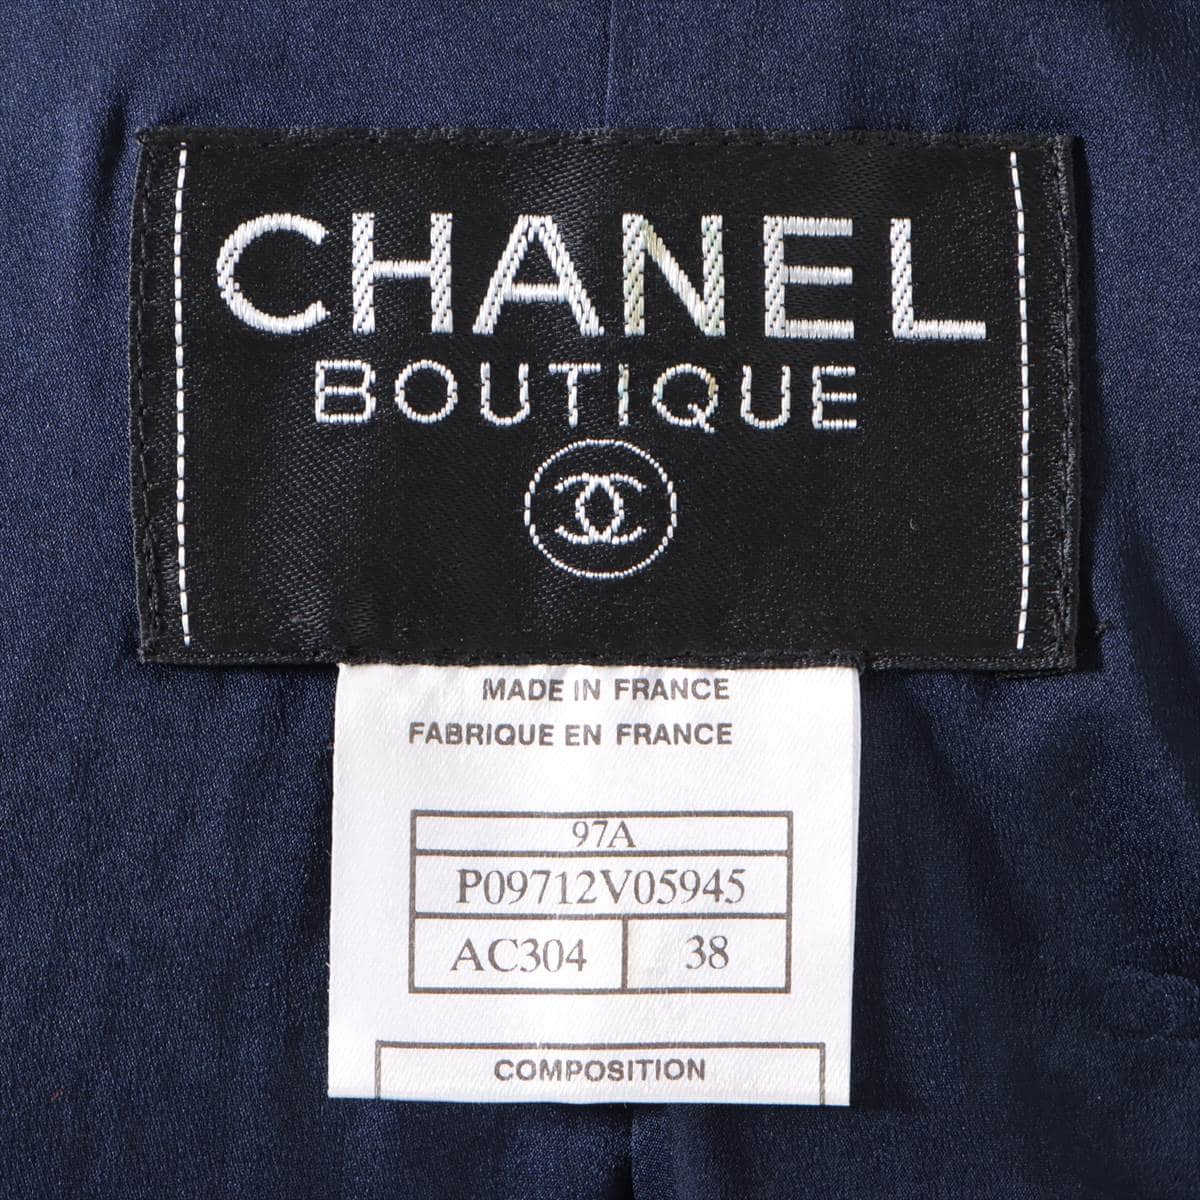 Chanel Coco Button 97A Wool & nylon Setup 38 Ladies' Navy blue